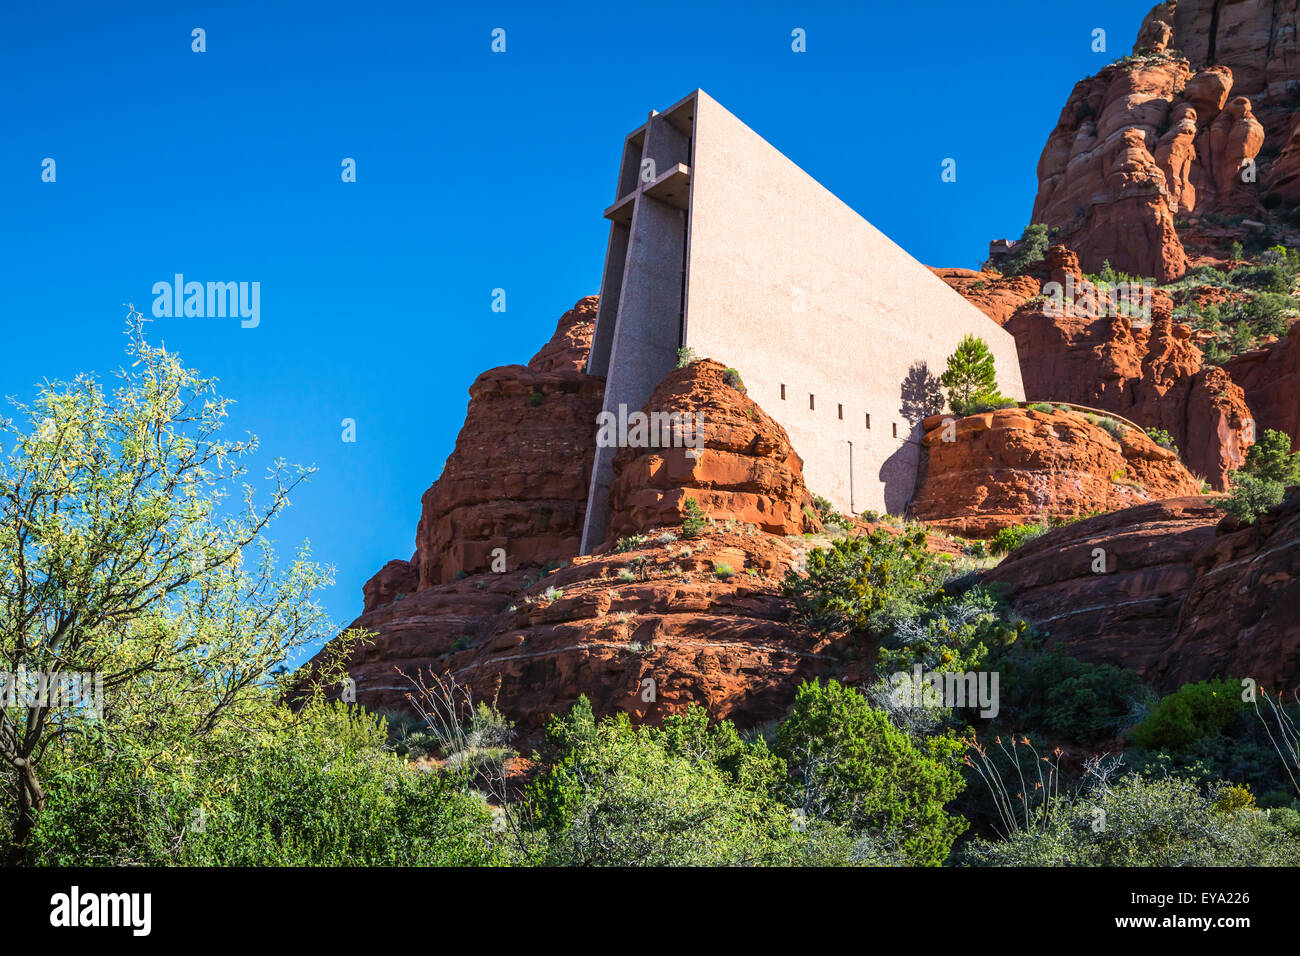 The Roman Catholic Chapel of the Cross in the red buttes of Sedona, Arizona, USA. Stock Photo